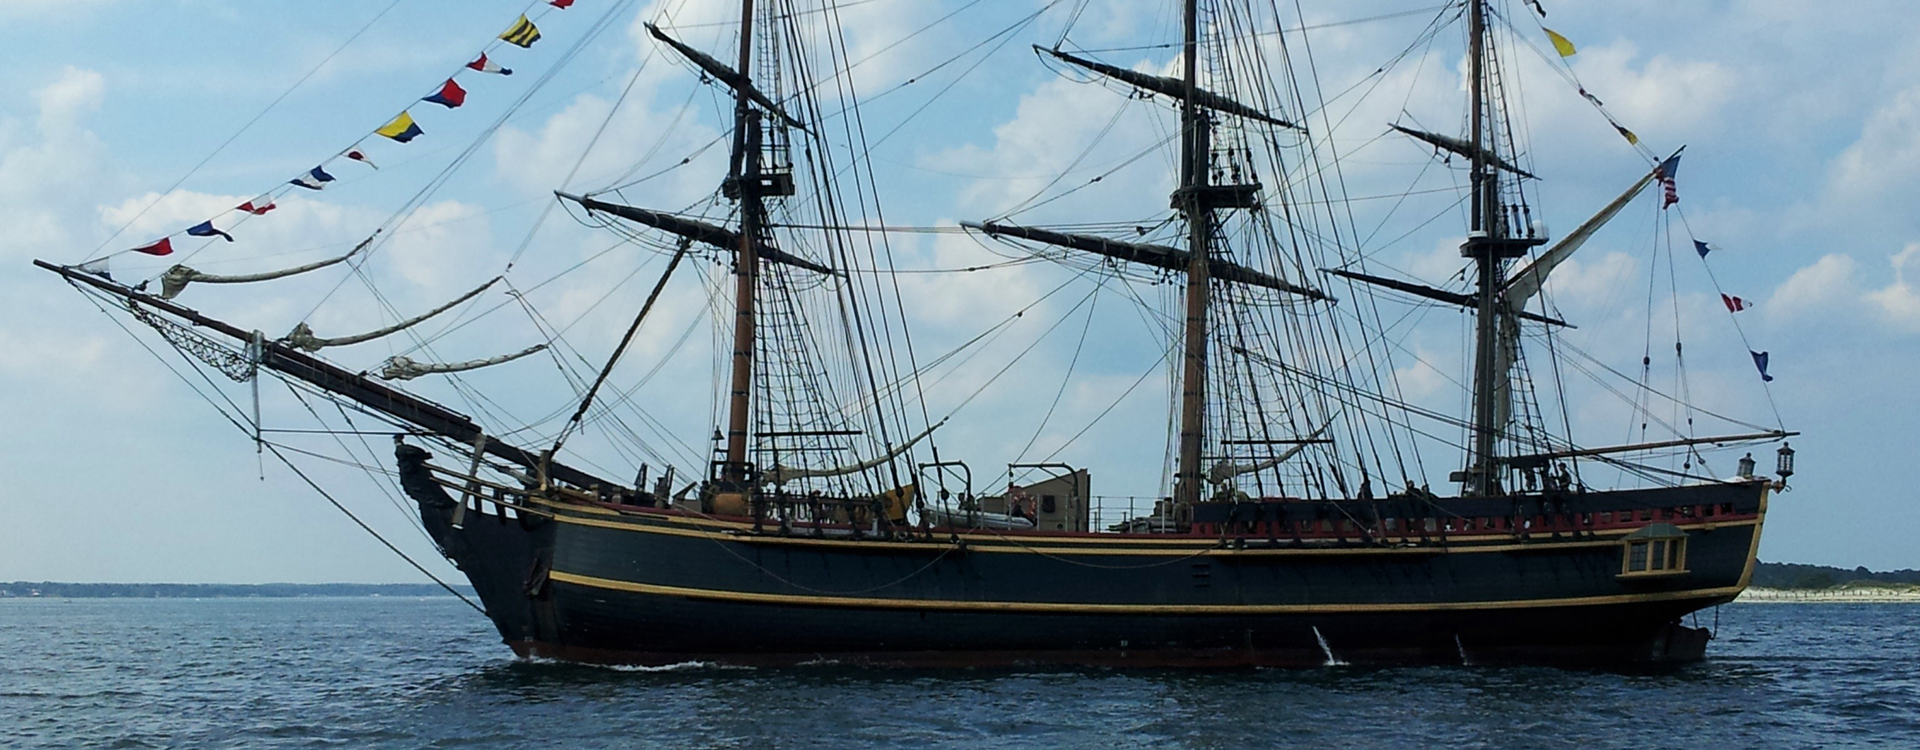 Sail boat Galleon War